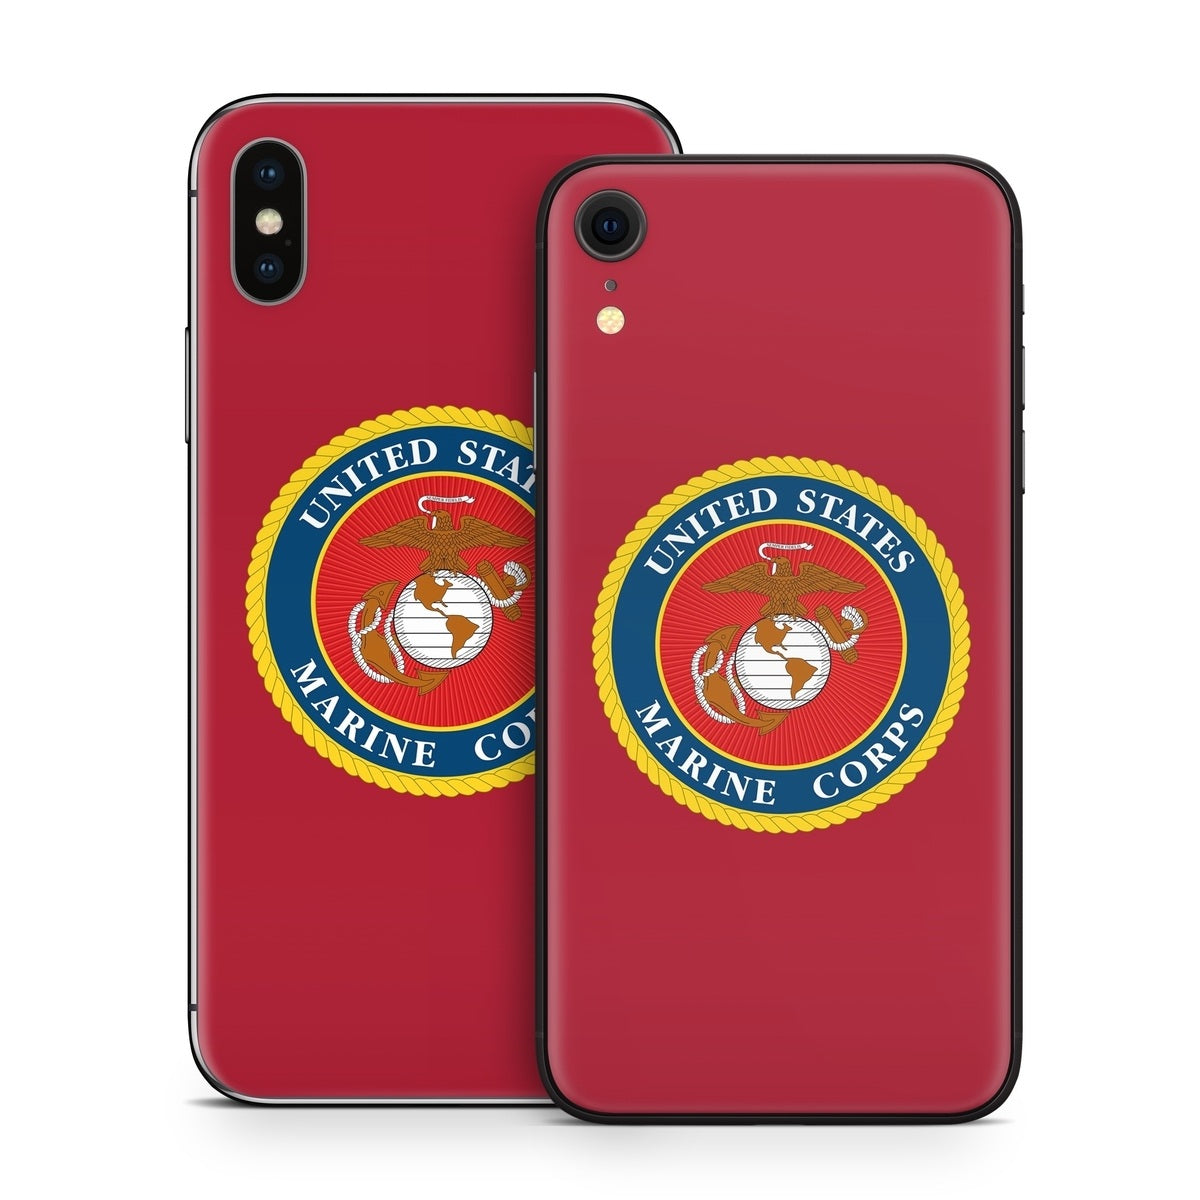 USMC Red - Apple iPhone X Skin